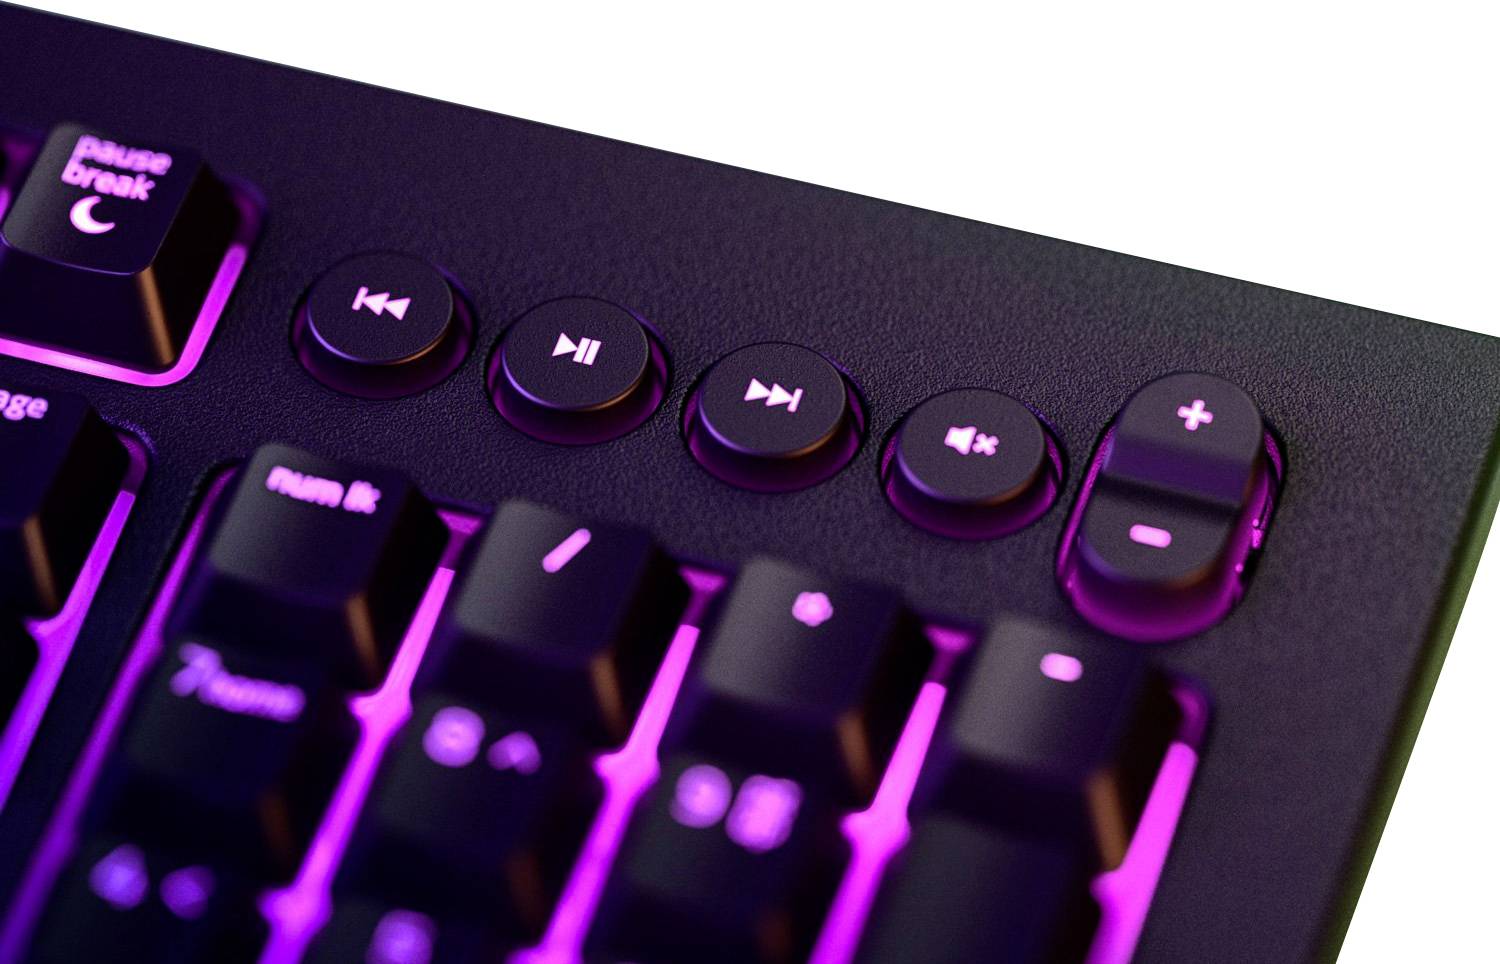 Razer Cynosa Chroma Keyboard